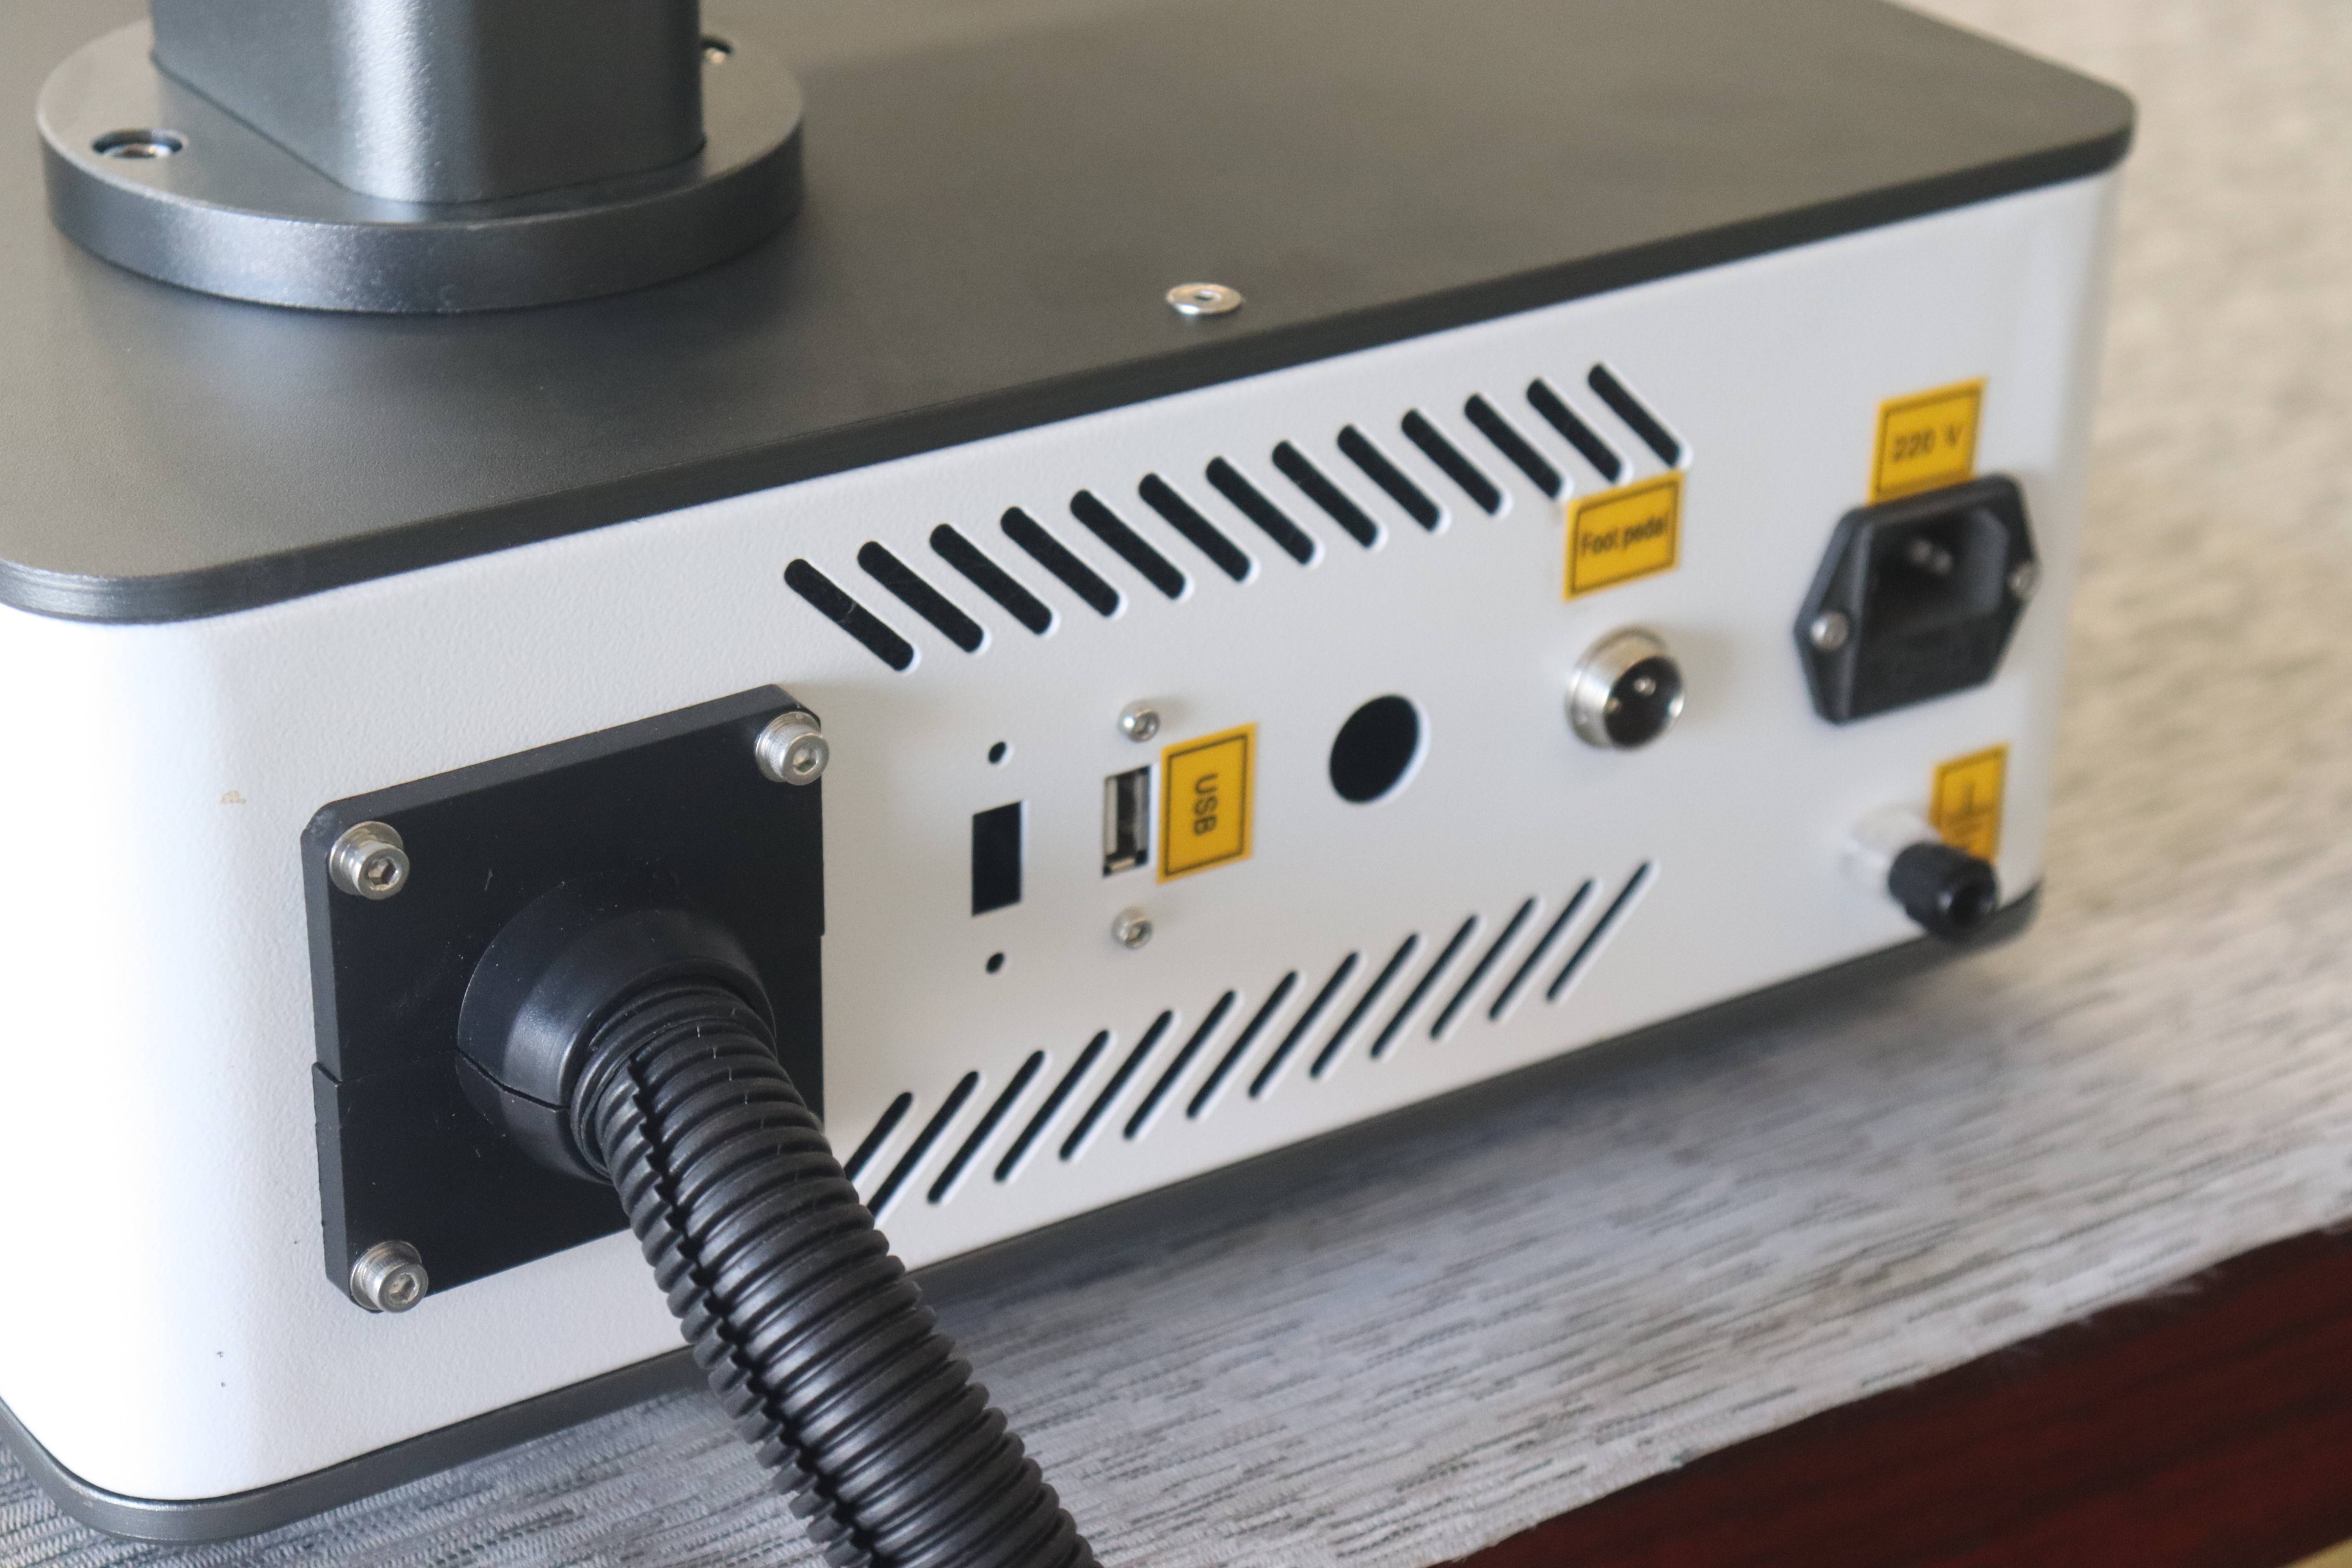 Combined mini UV laser marking machine